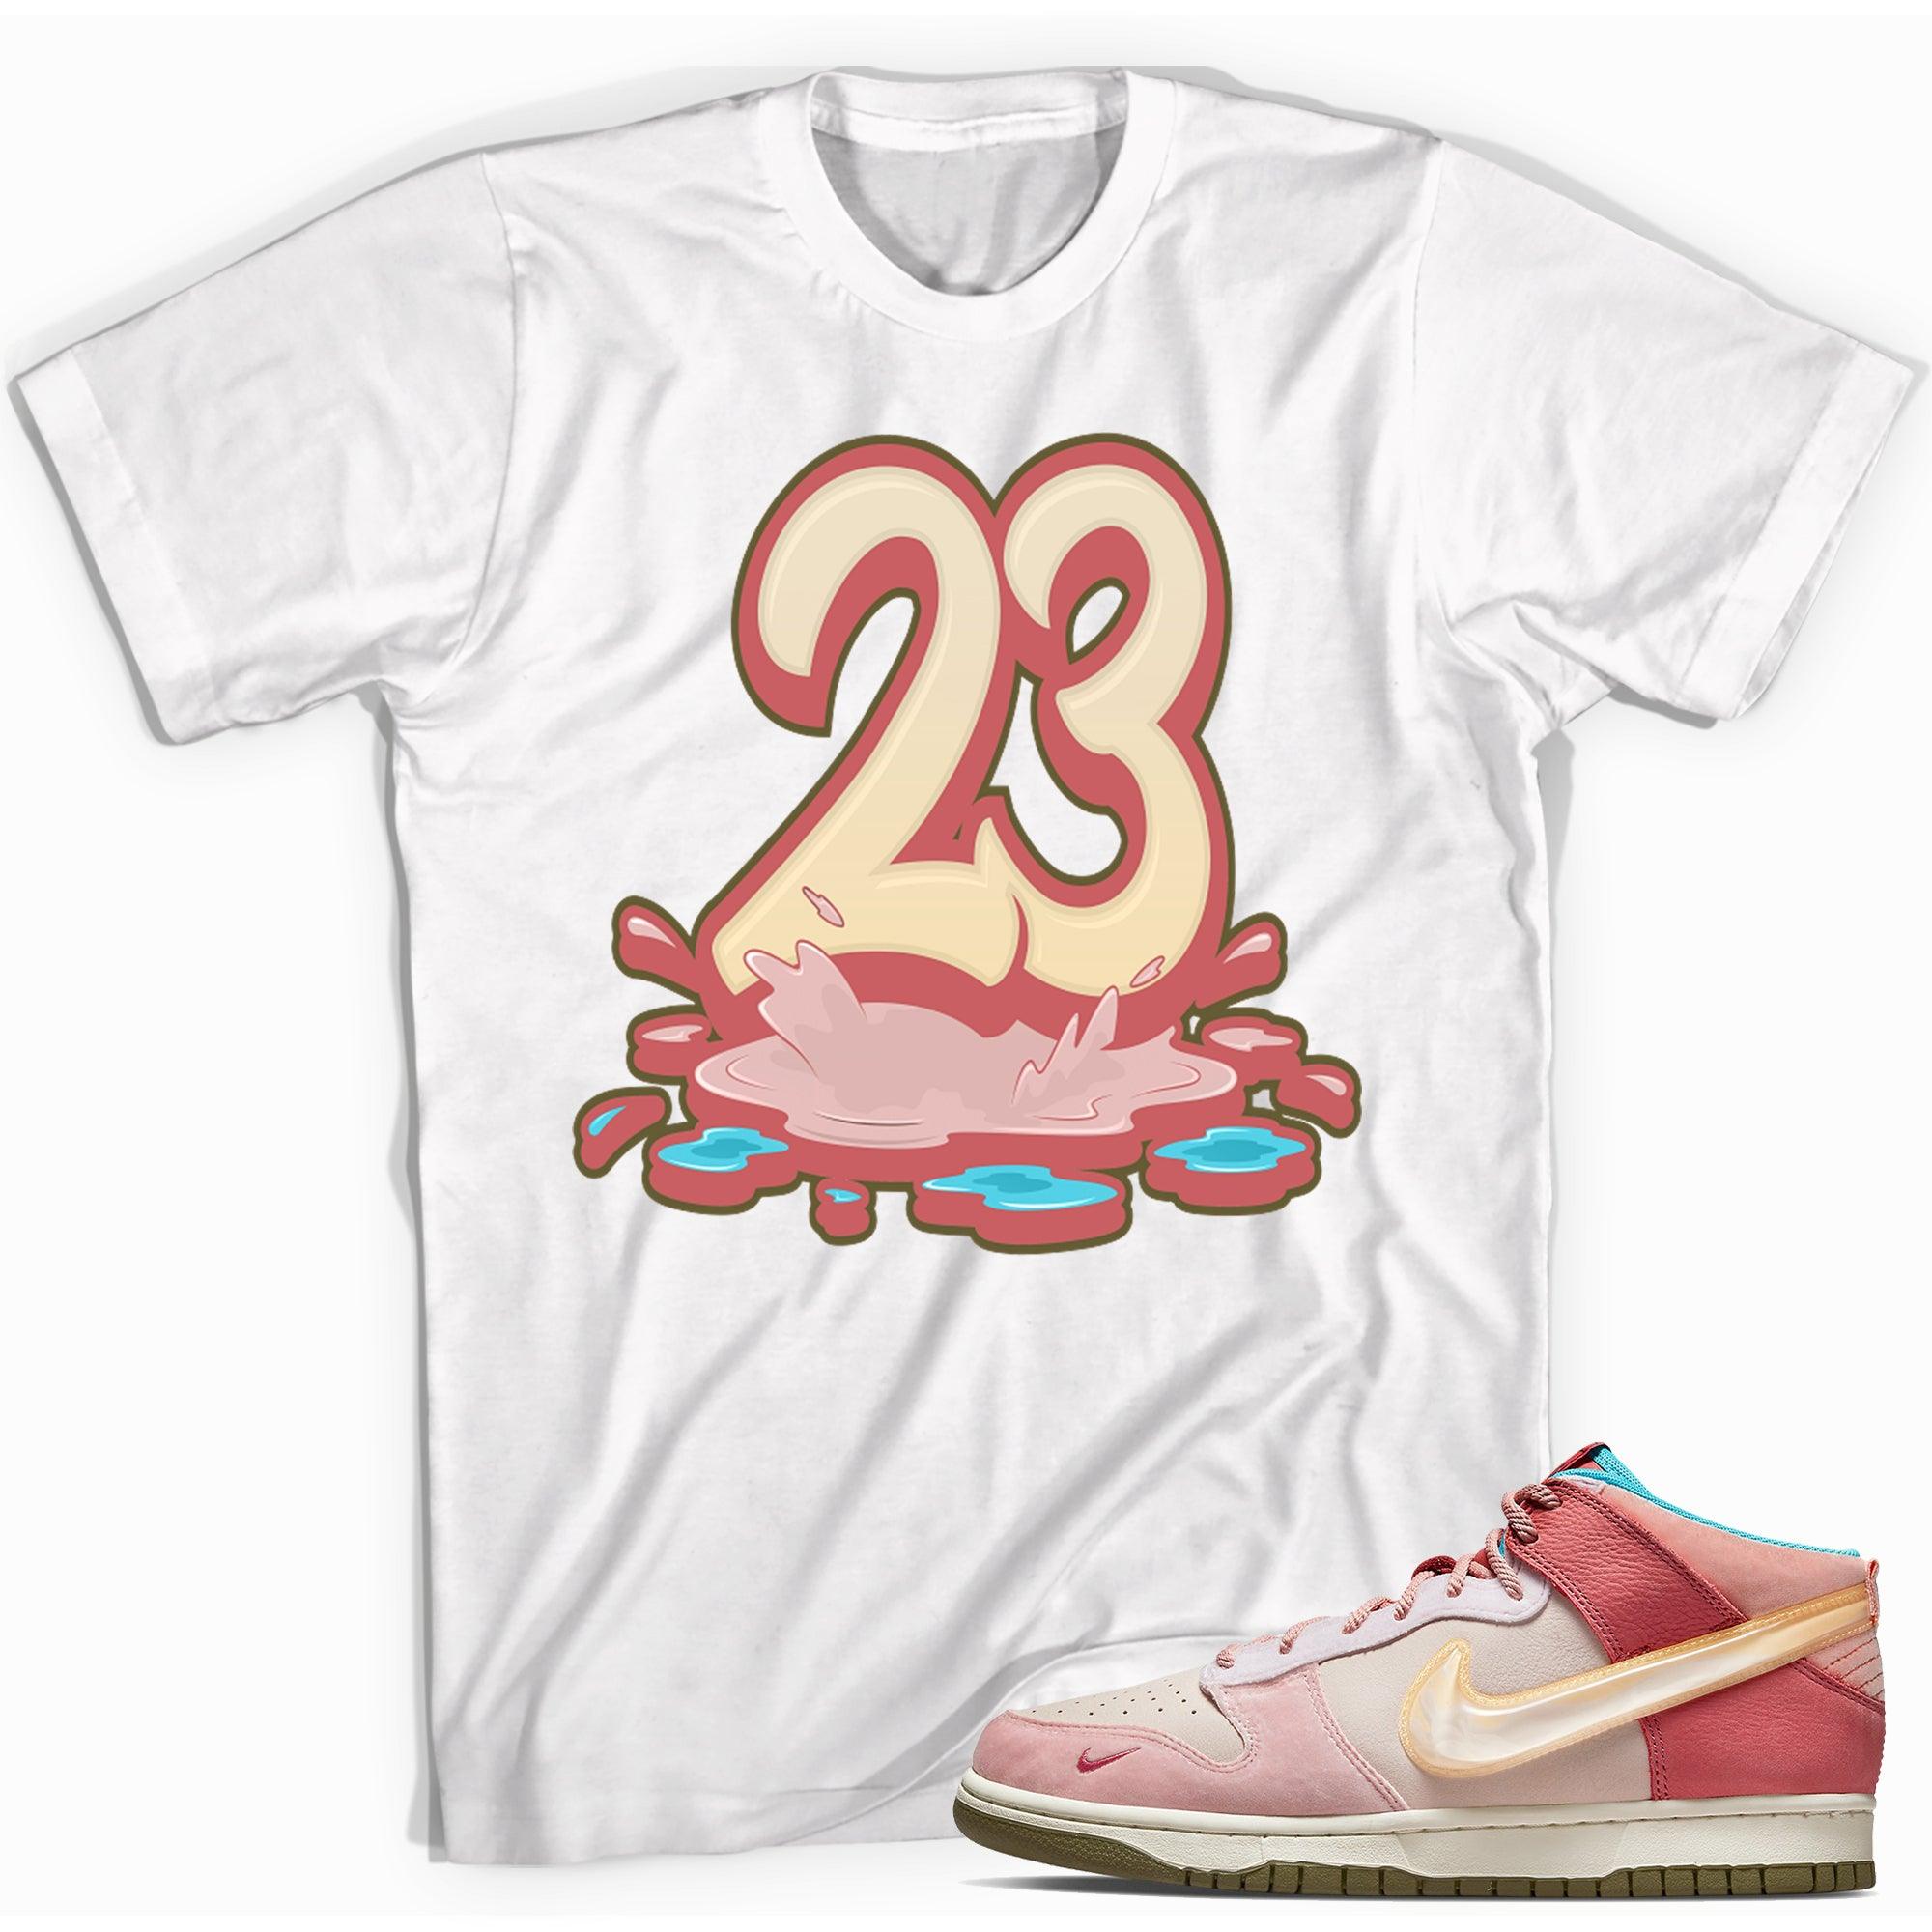 23 Melting Shirt Nike Dunks Mid Social Status Free Lunch Strawberry Milk photo